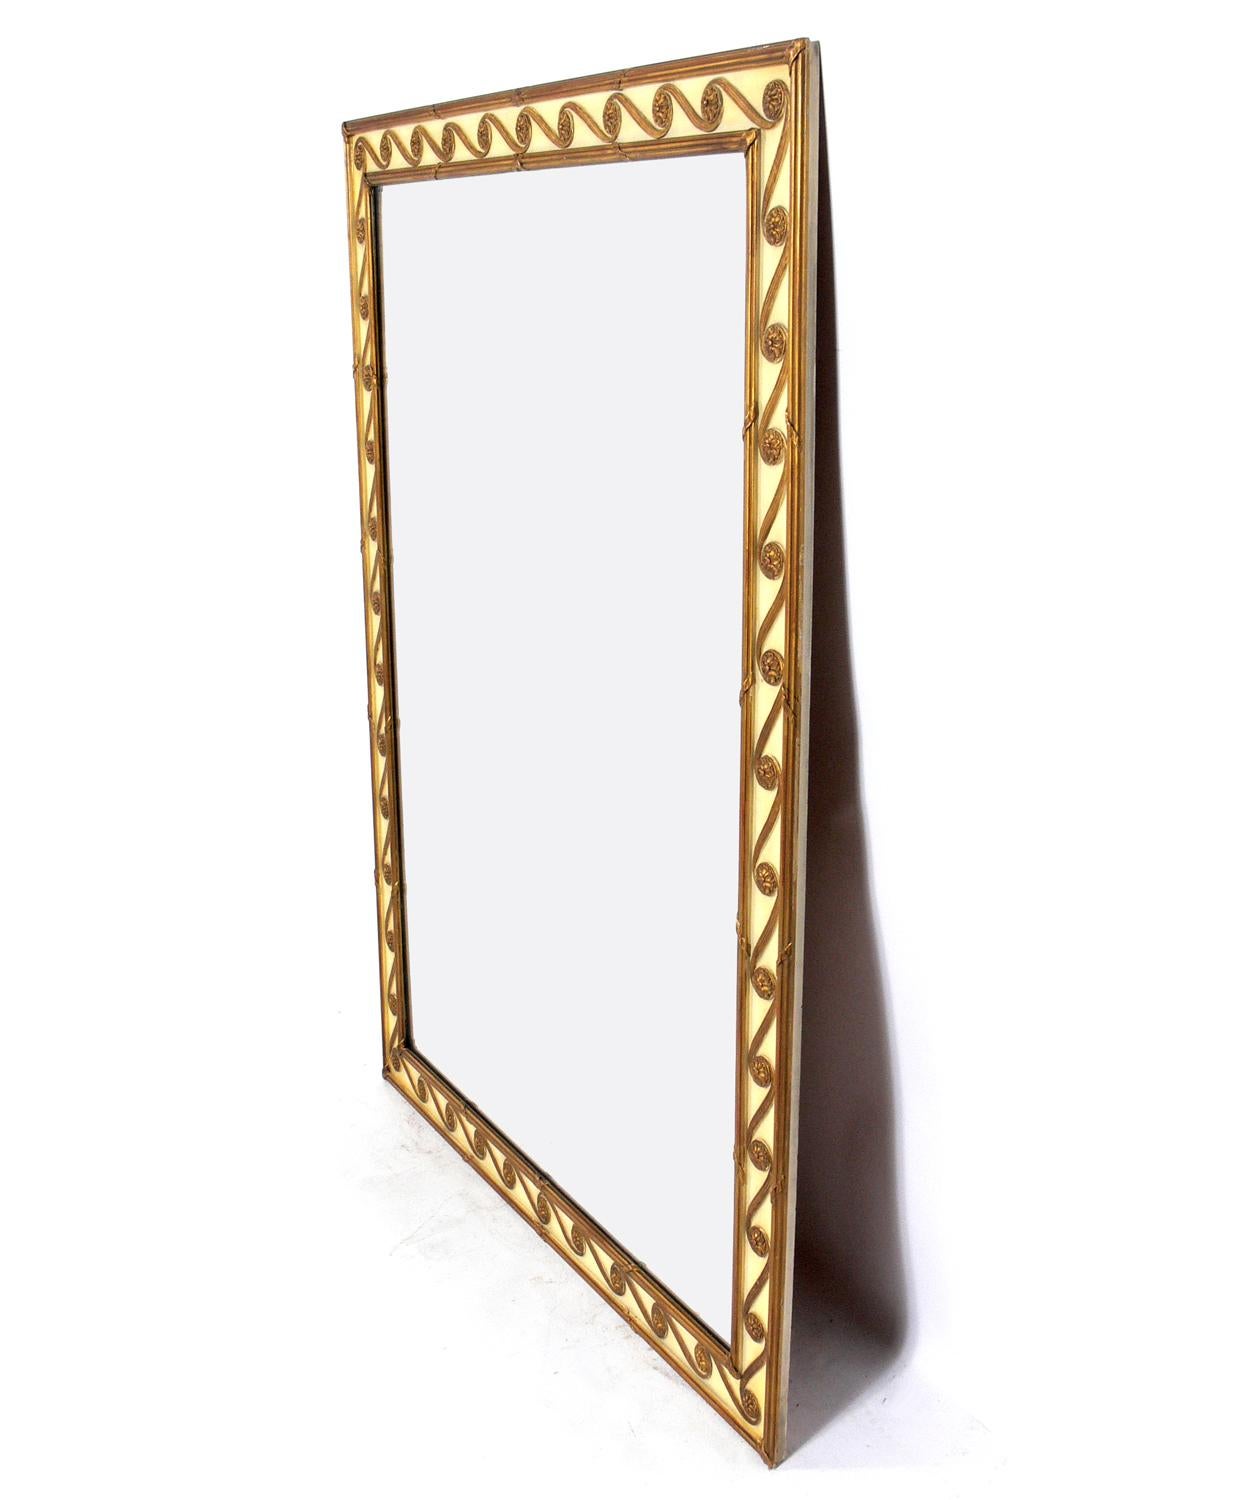 Elegant ivory and gilt mirror, probably French, circa 1940s. Retains warm original patina.